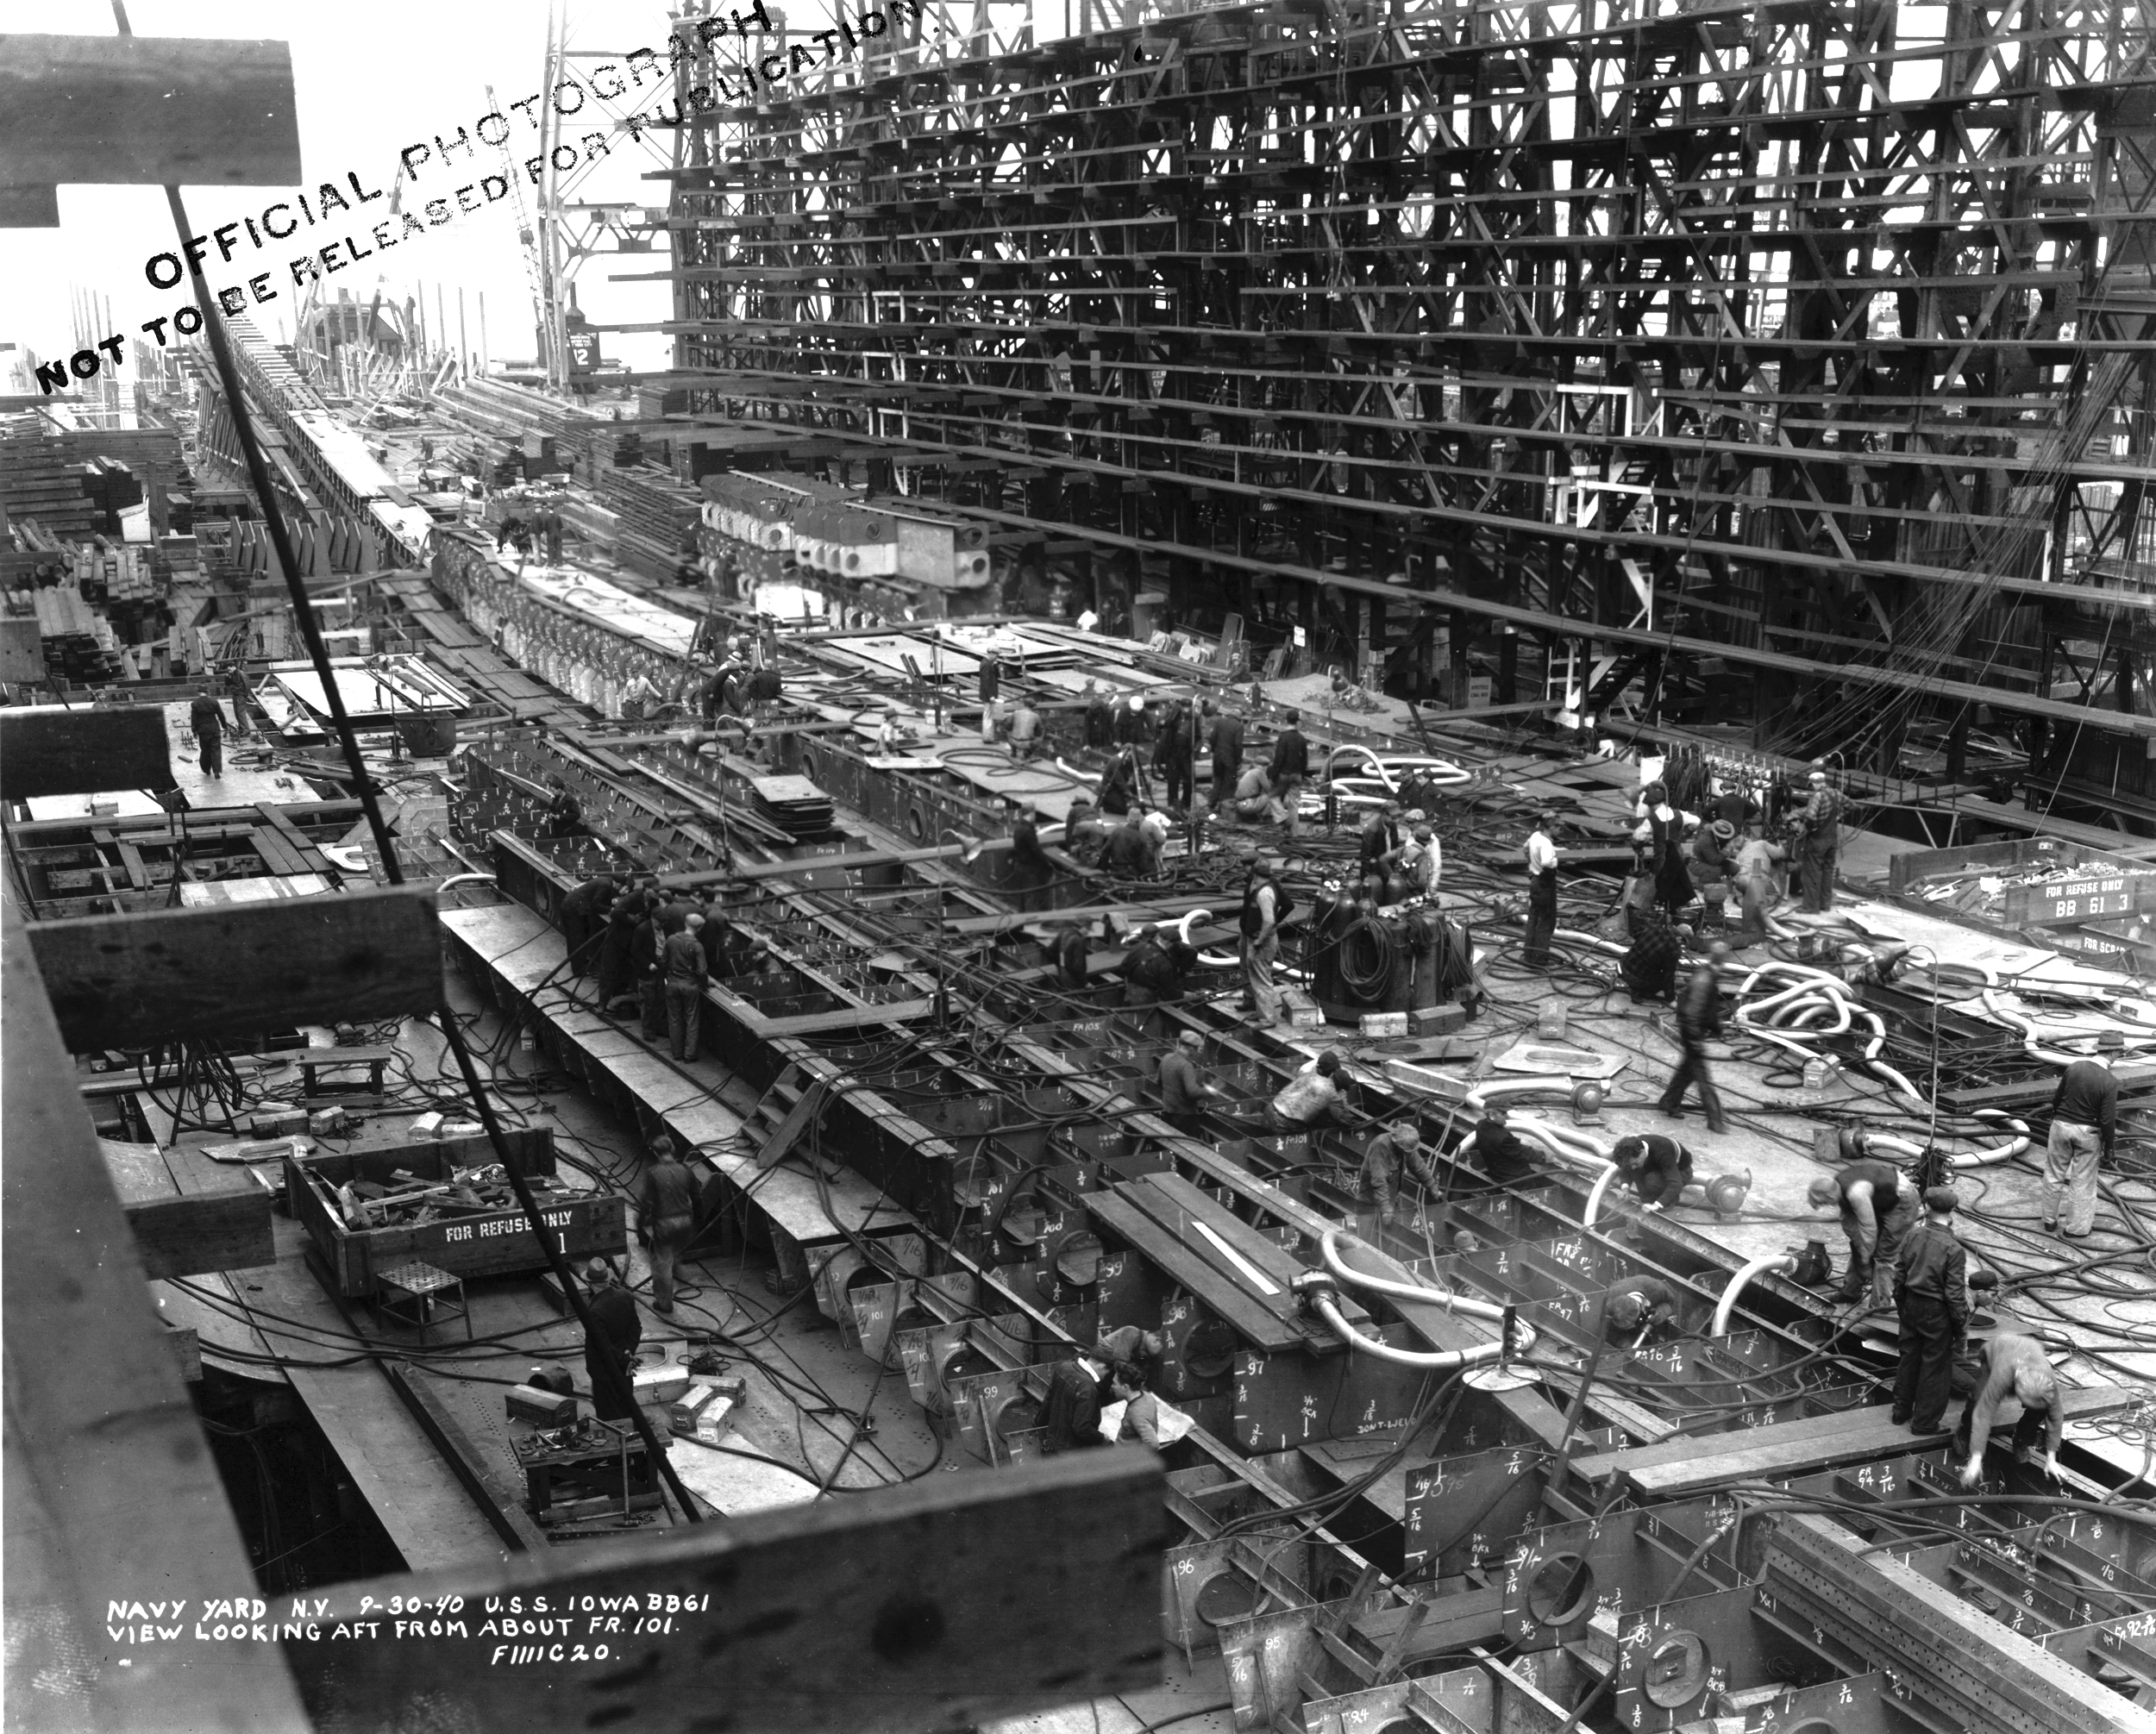 Battleship Iowa under construction, New York Navy Yard, New York, United States, 30 Sep 1940, photo 1 of 2